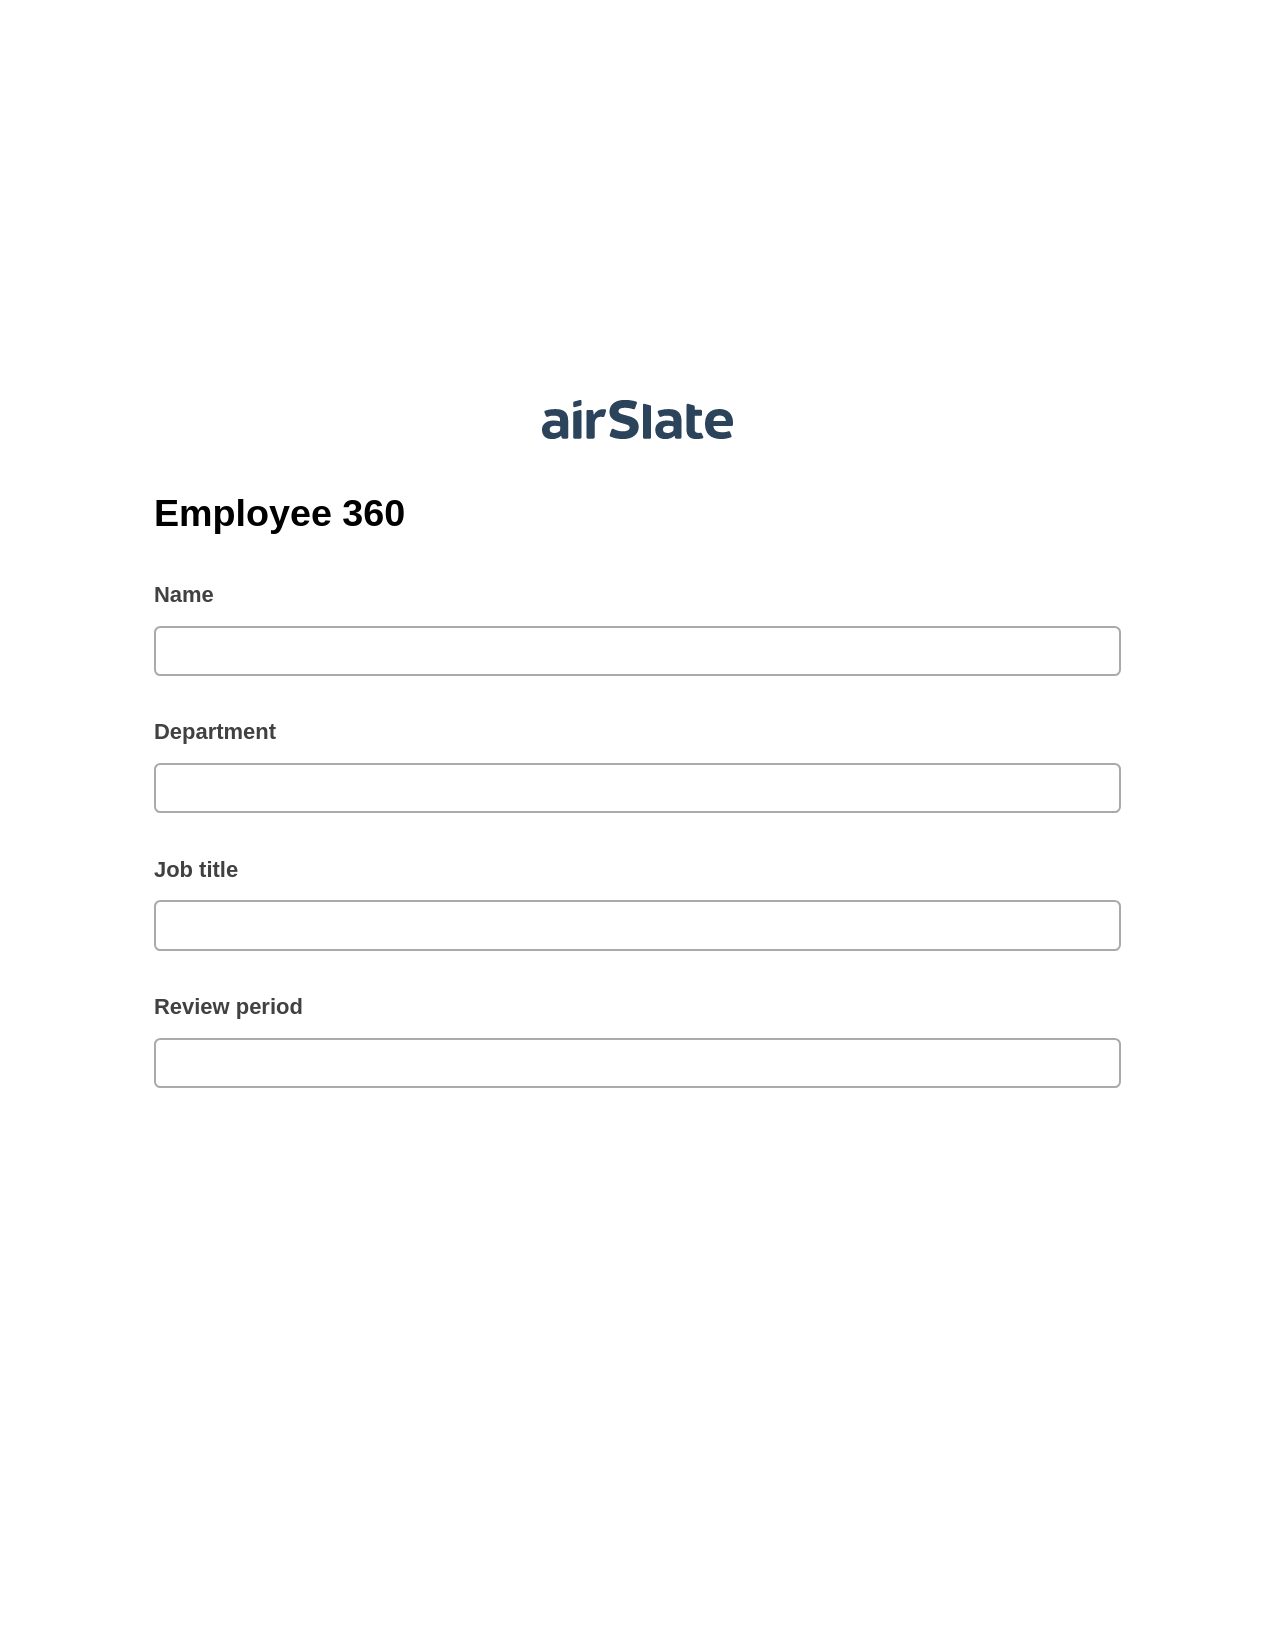 Multirole Employee 360 Pre-fill from CSV File Bot, Google Cloud Print Bot, Slack Notification Postfinish Bot